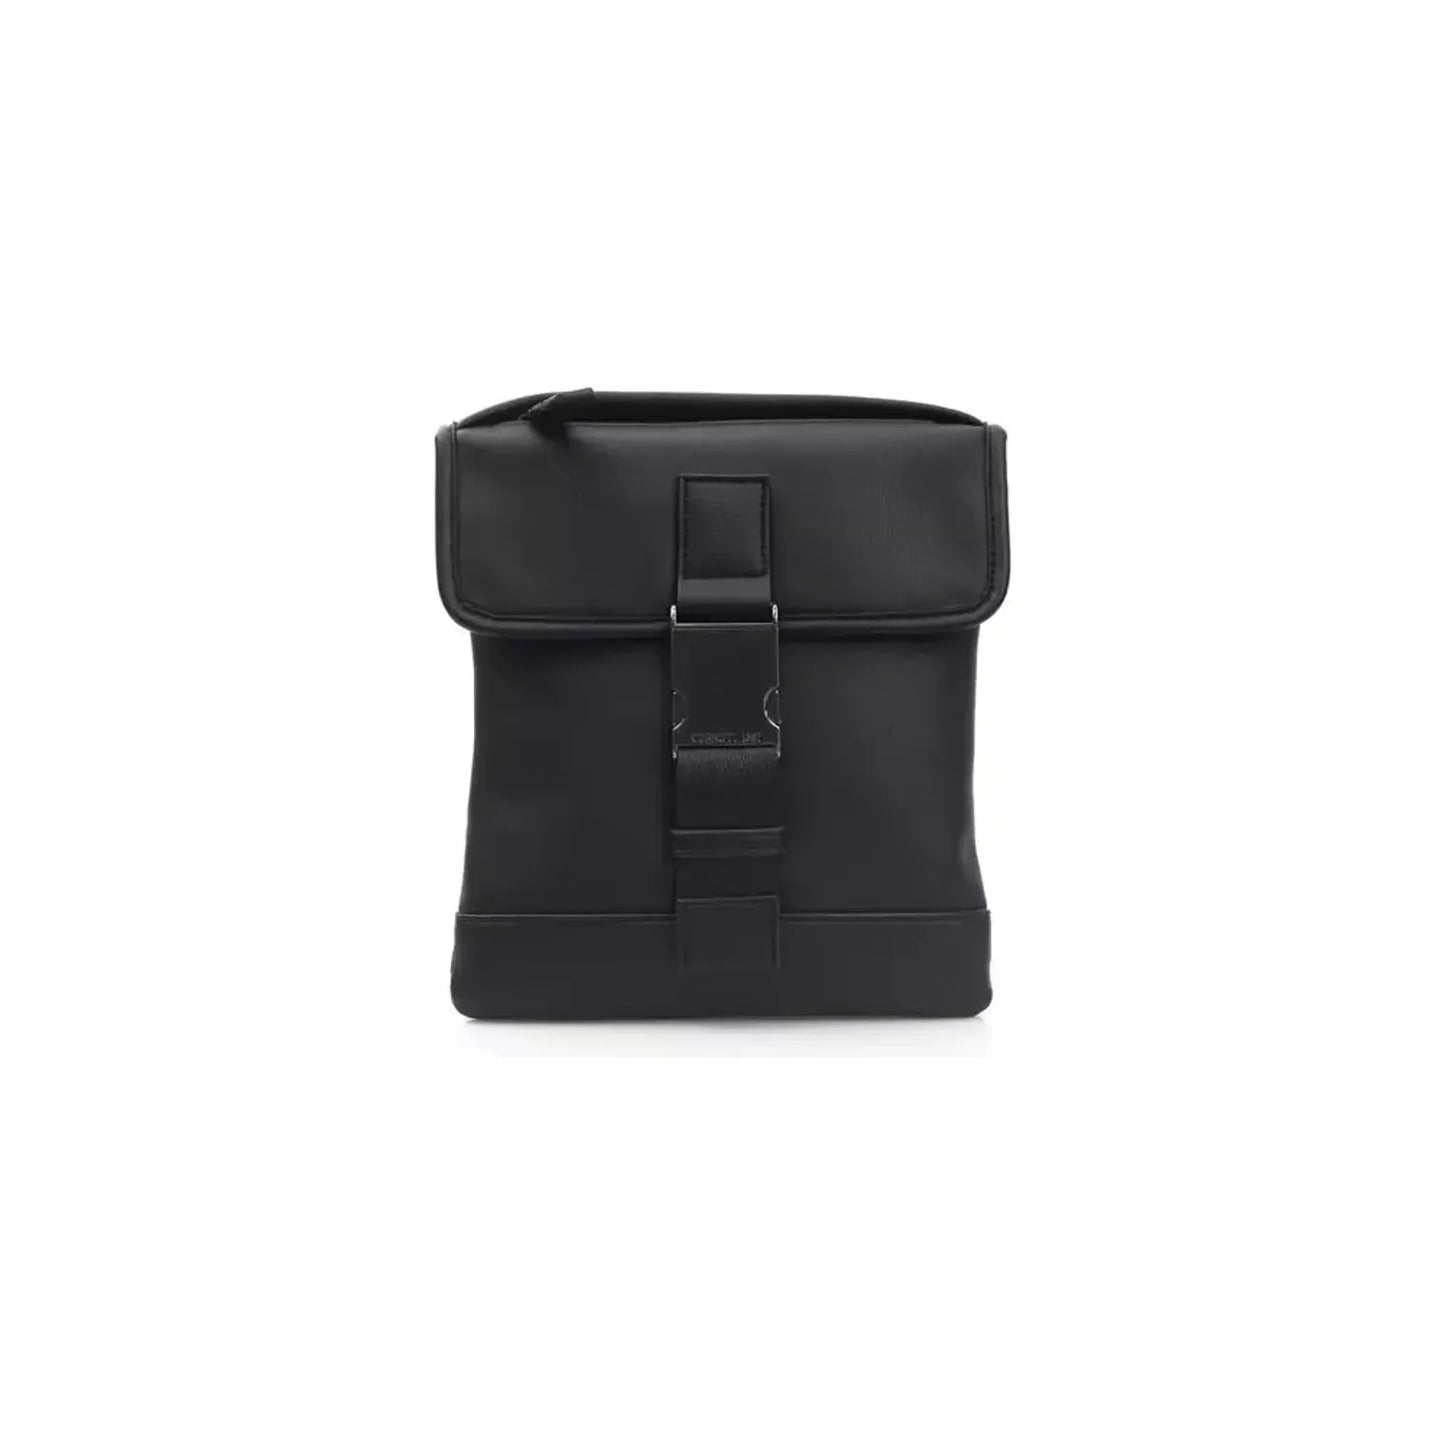 Cerruti 1881 Elegant Black Messenger Bag with Metal Clasp black-polyurethane-messenger-bag product-22959-85864664-24-1acdb484-ce3.webp